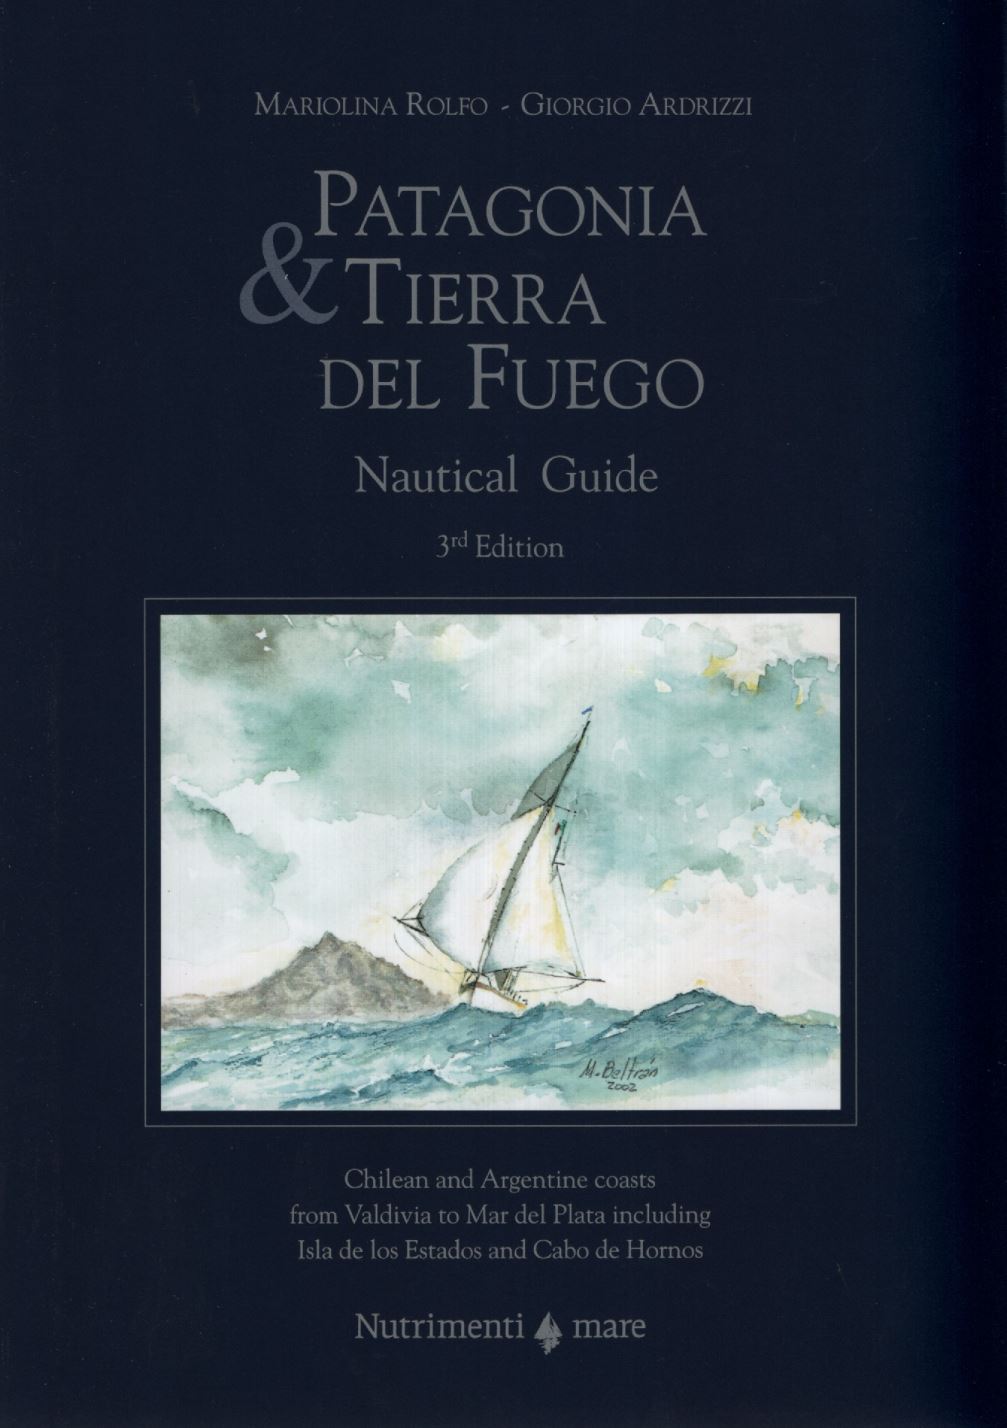 Patagonia and tierra del fuego nautical guide